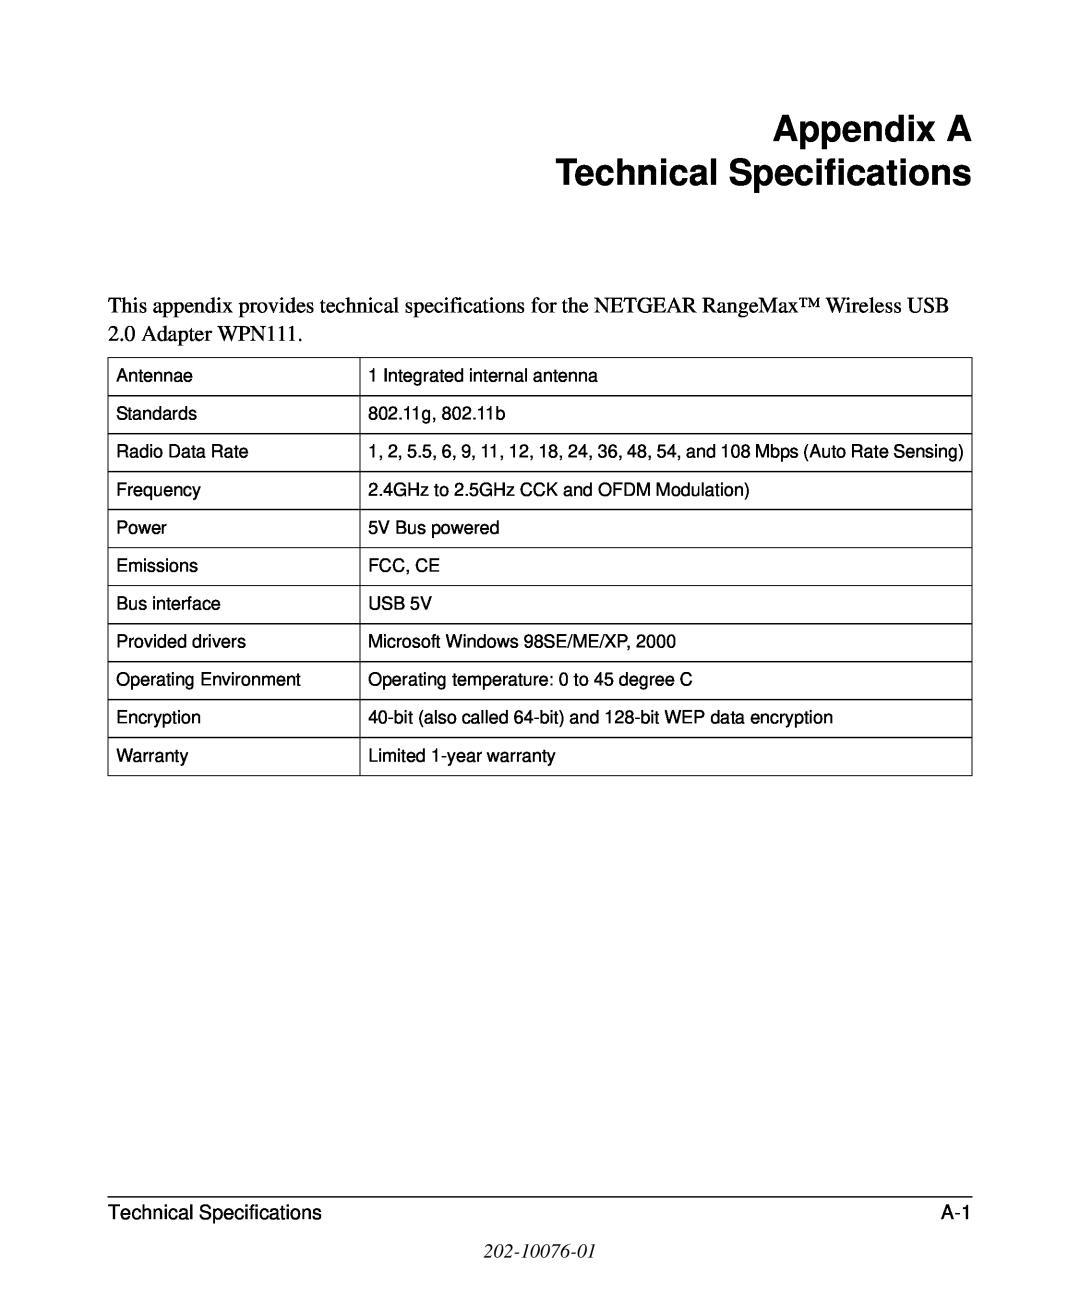 NETGEAR WPN111 user manual Appendix A Technical Specifications, T e ch n ica l S p e cifica tion s, 202-10076-01 